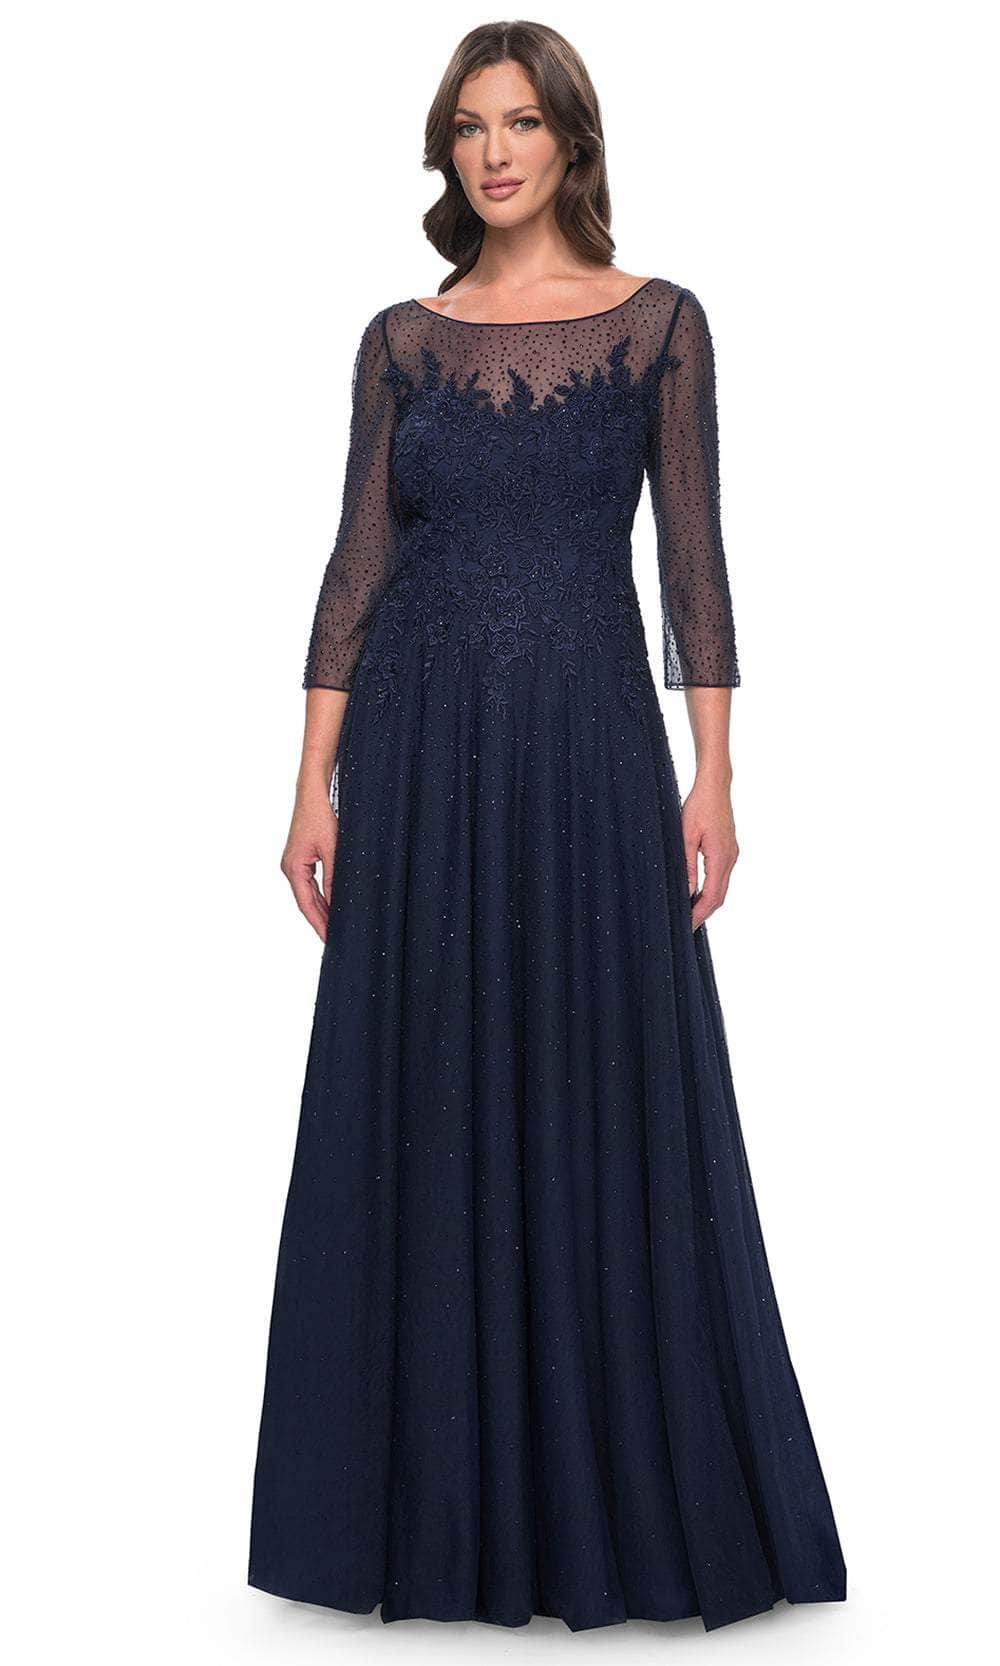 Image of La Femme 31235 - Embroidered Embellished A-line Evening Gown